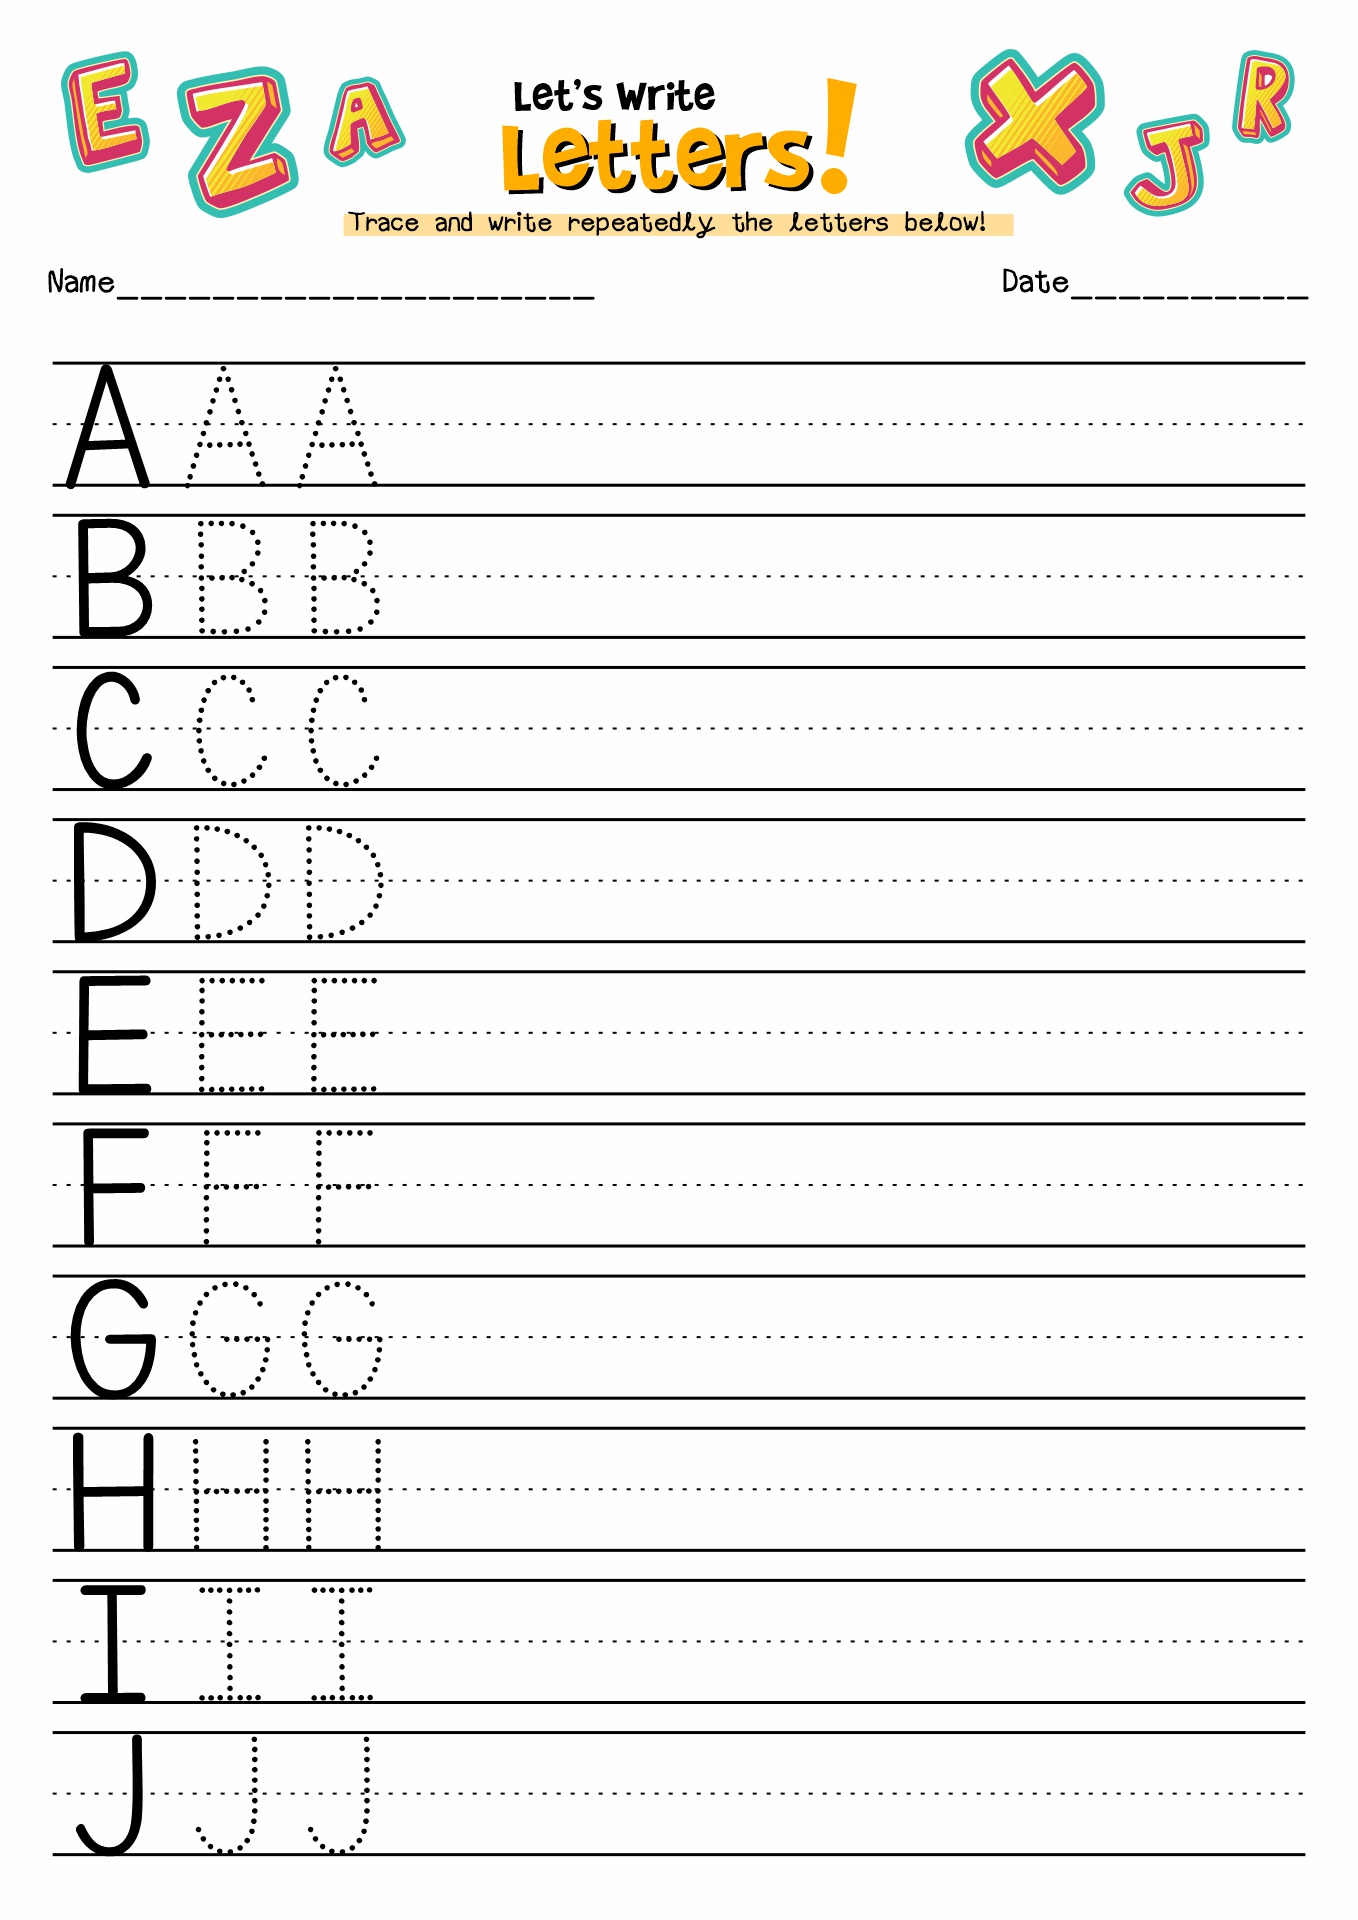 Letter-Writing Alphabet Practice Image